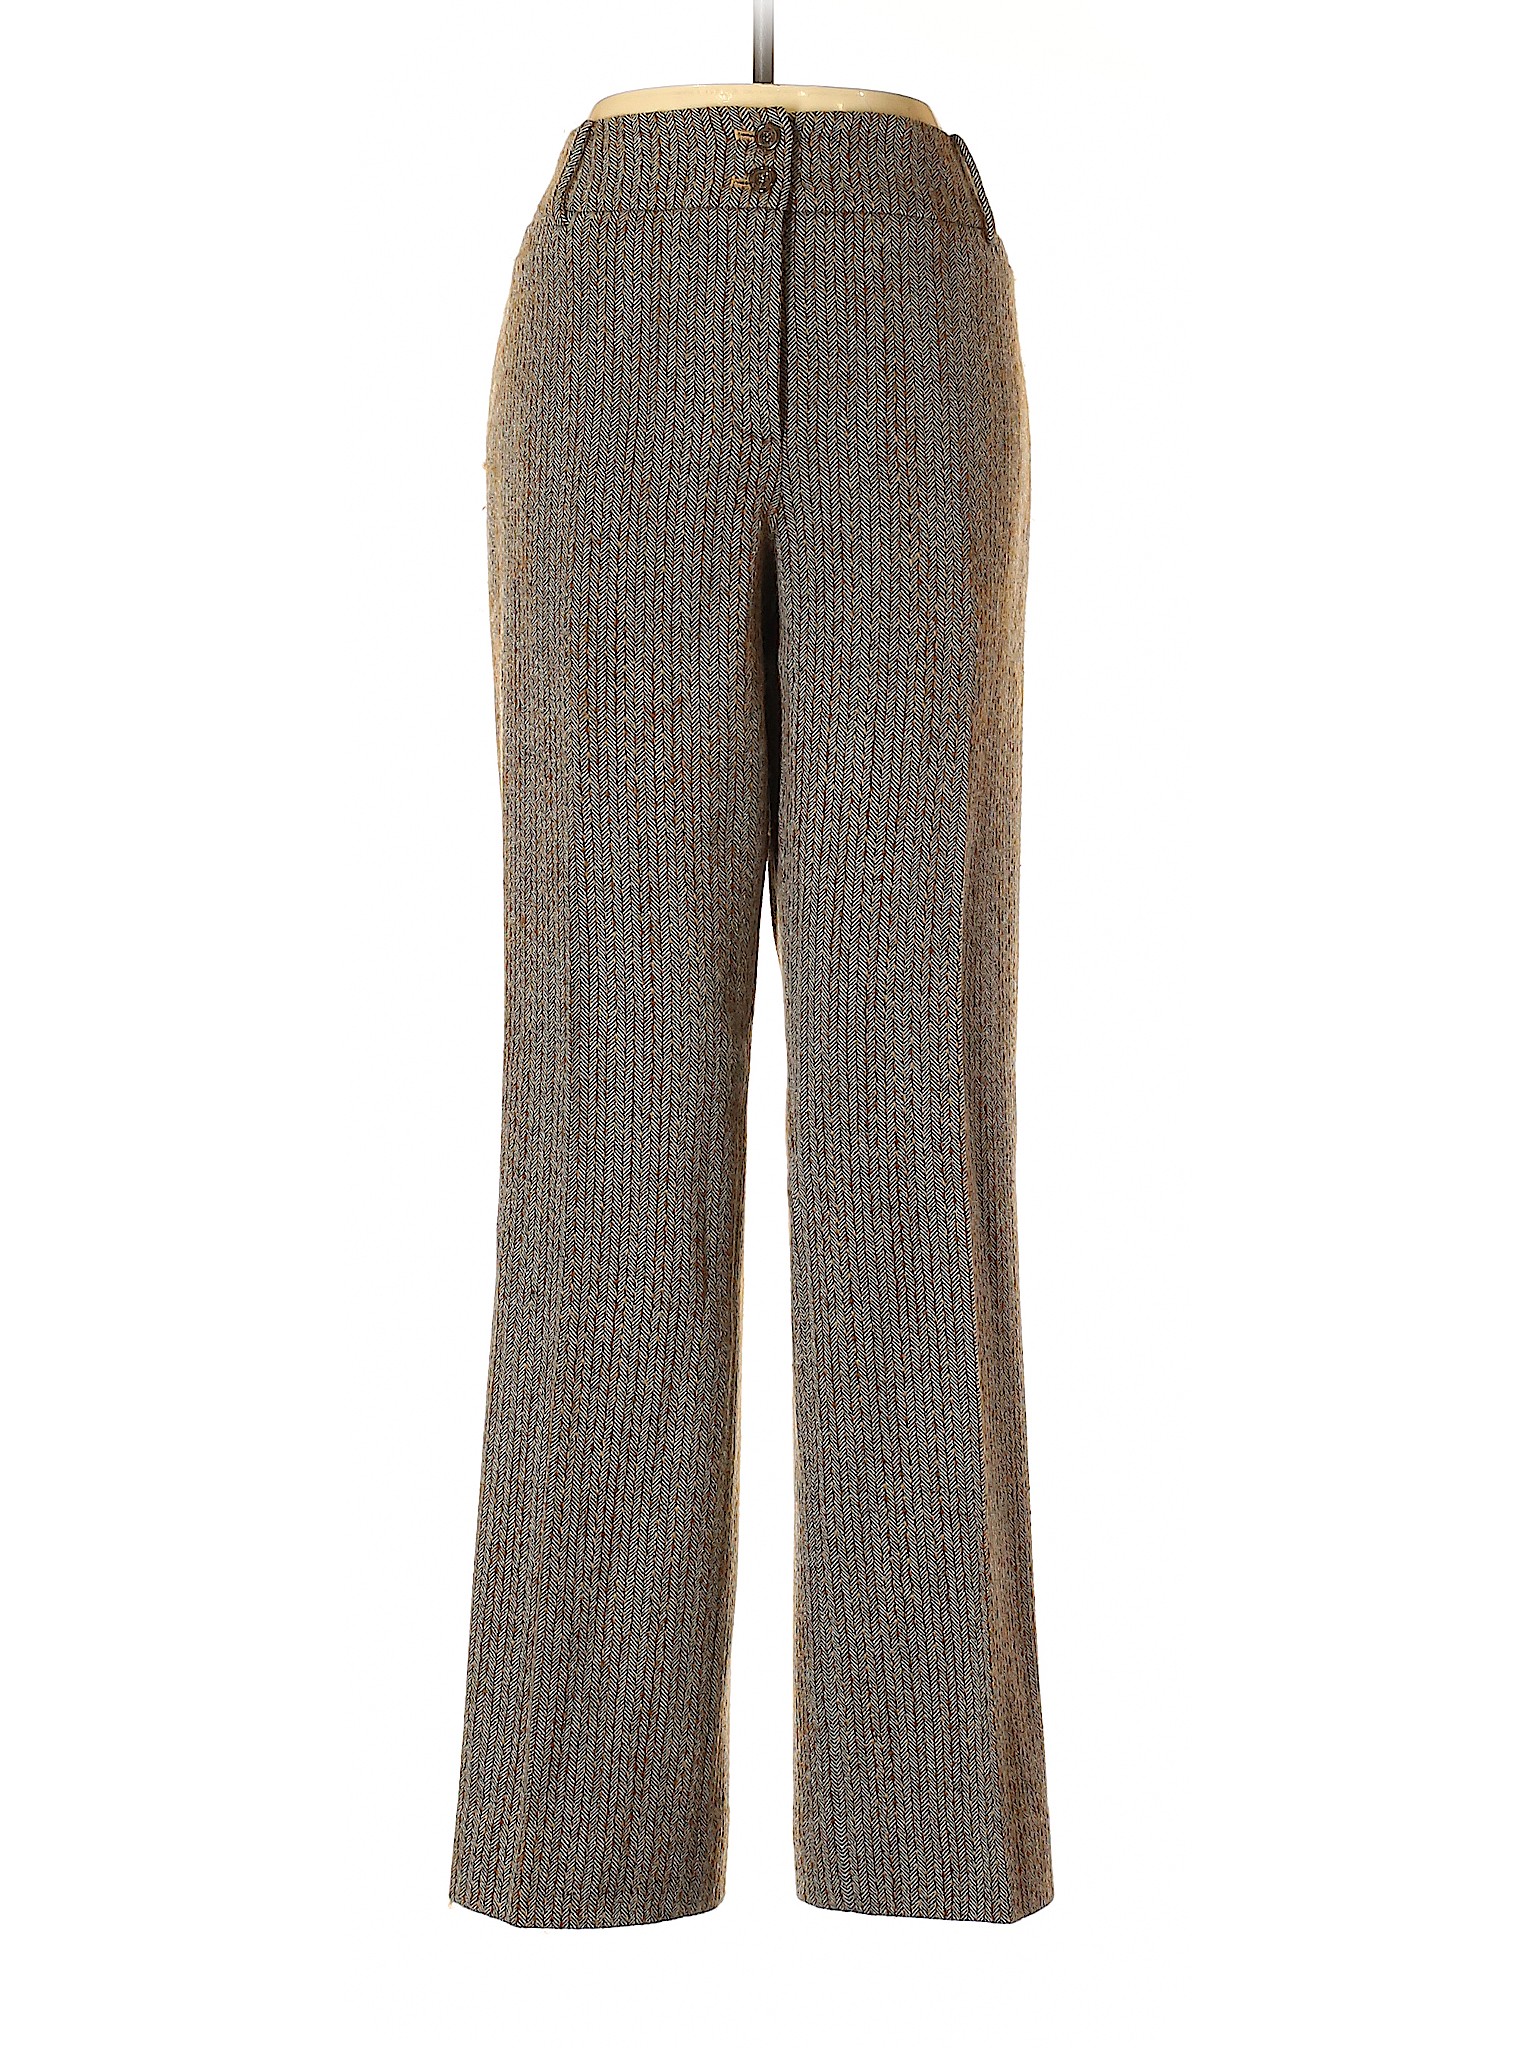 Carlisle Women Gray Wool Pants 8 | eBay